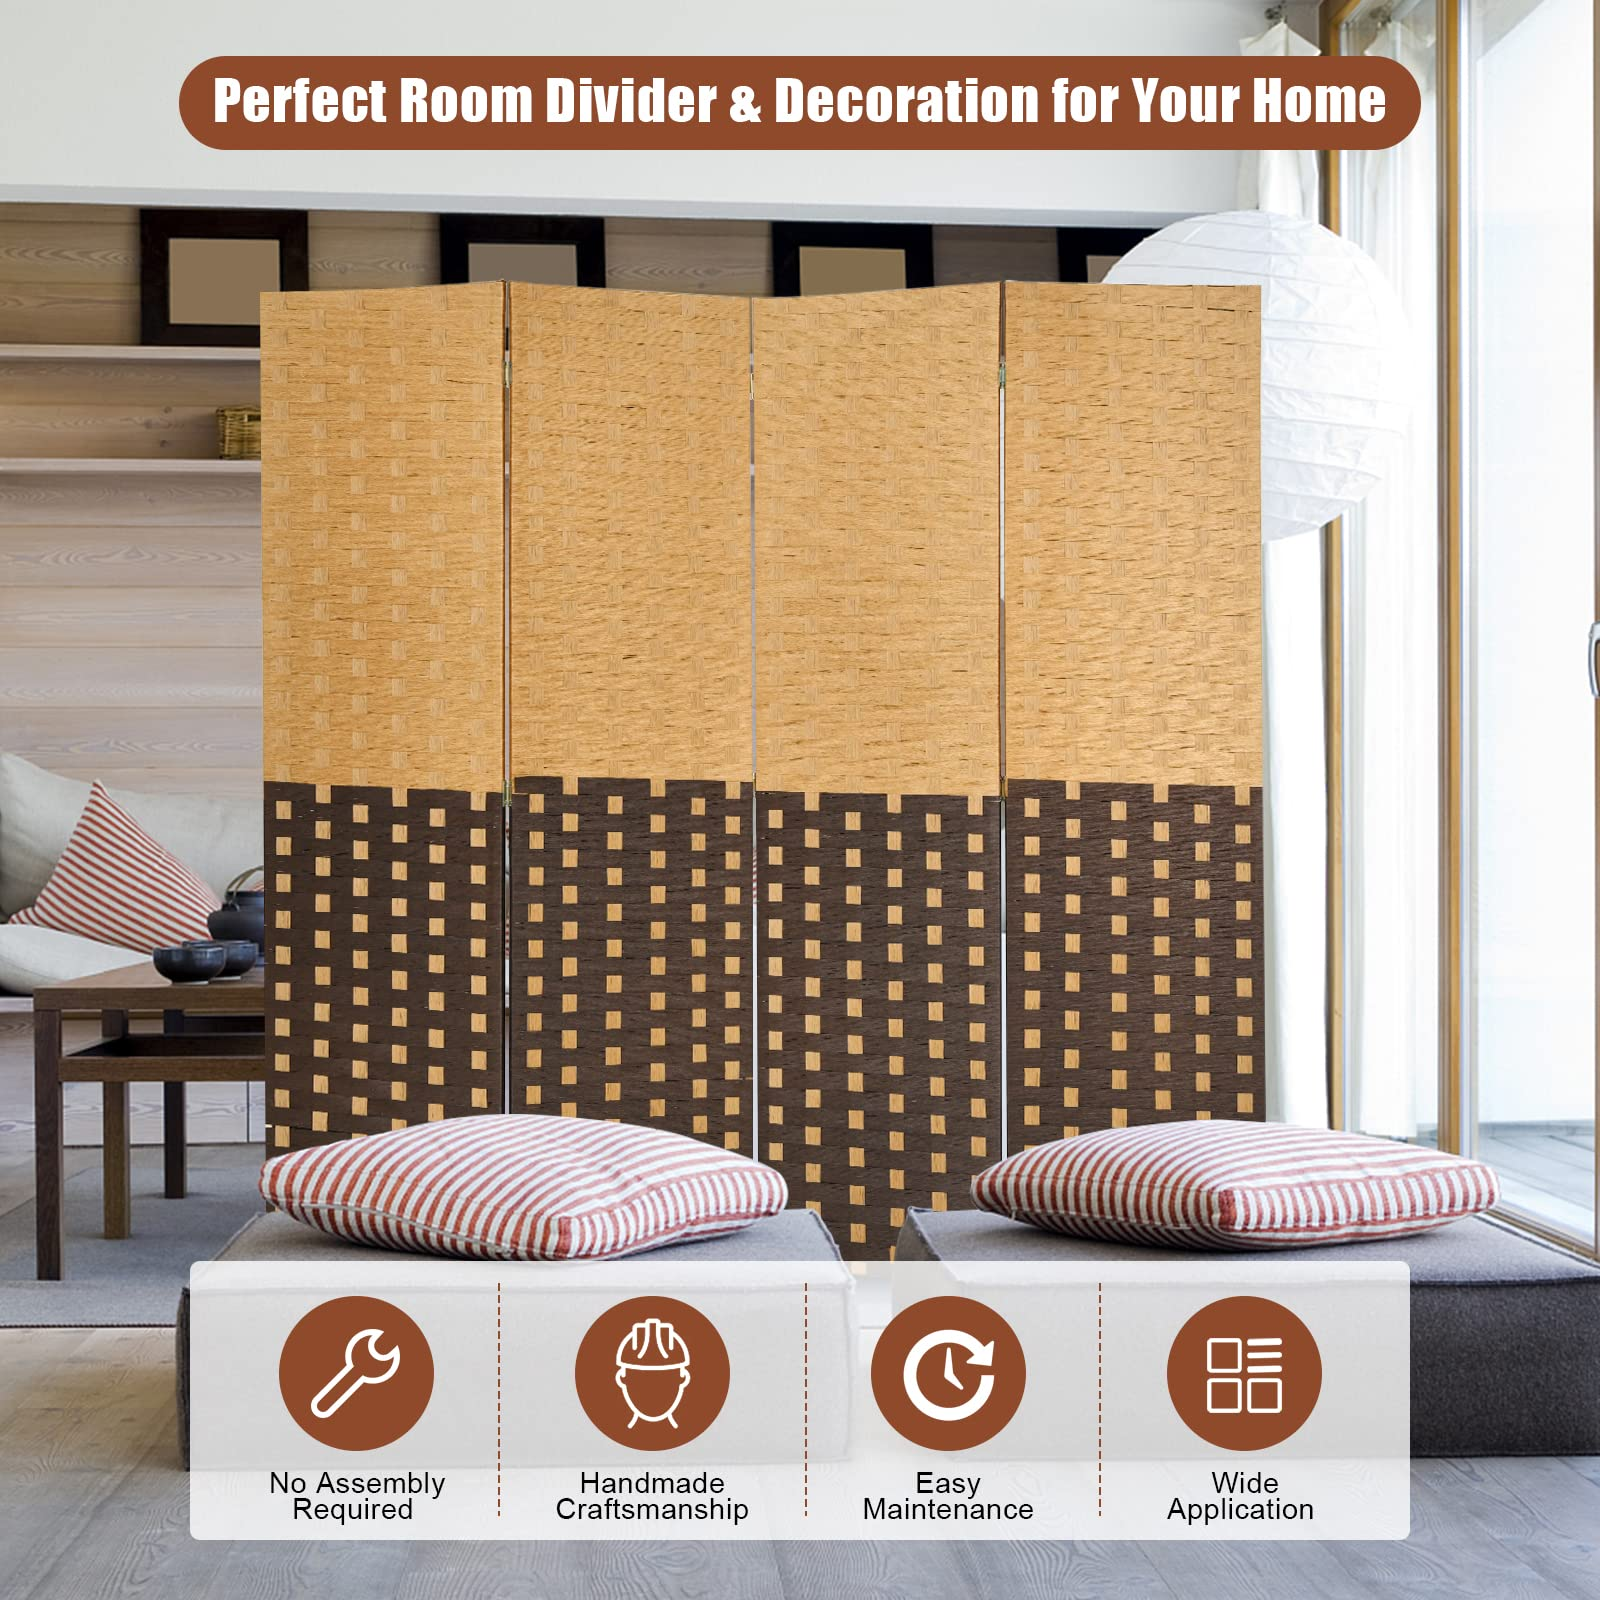 Giantex 4 Panel Room Divider, 6 Ft Tall Handmade Rattan Room Dividers, Portable Wood Room Separators Divider